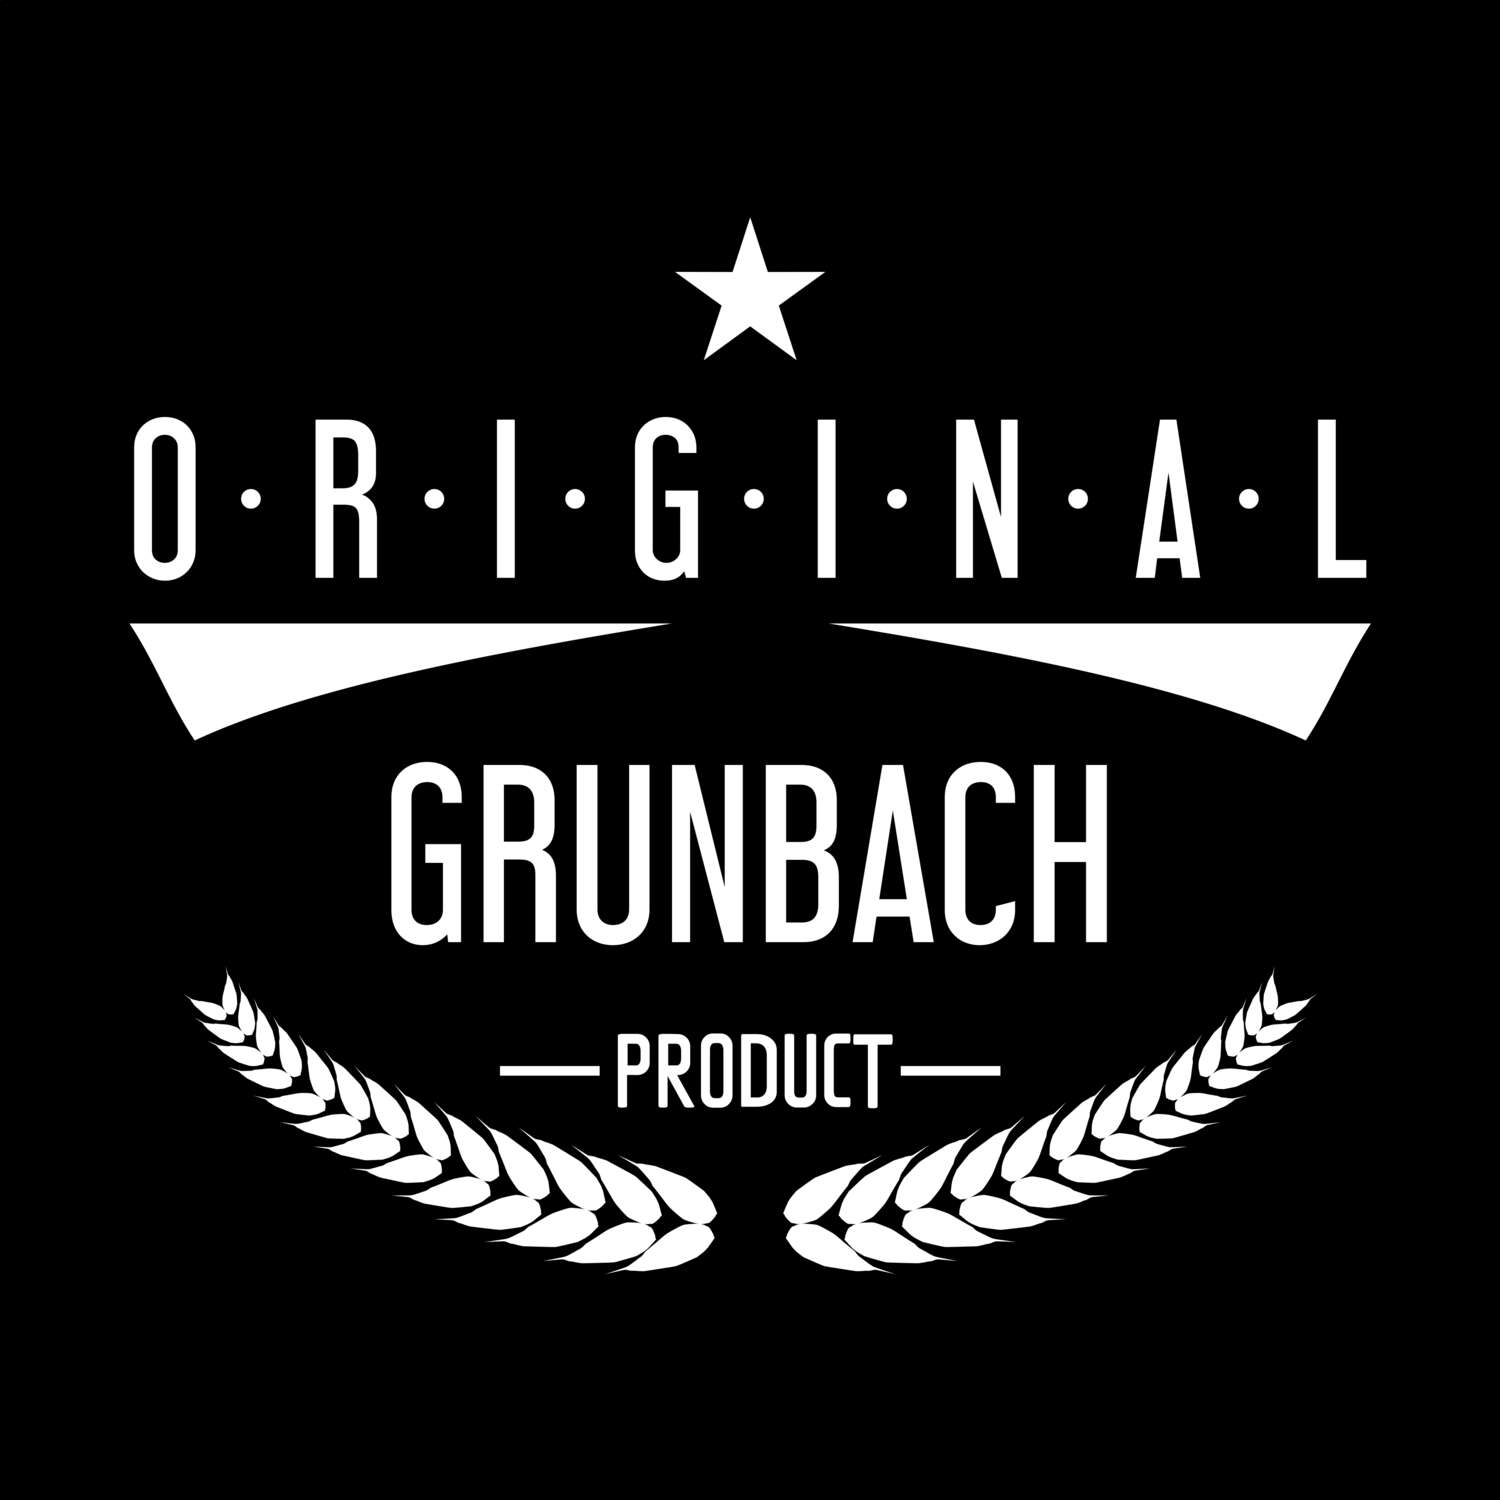 Grunbach T-Shirt »Original Product«